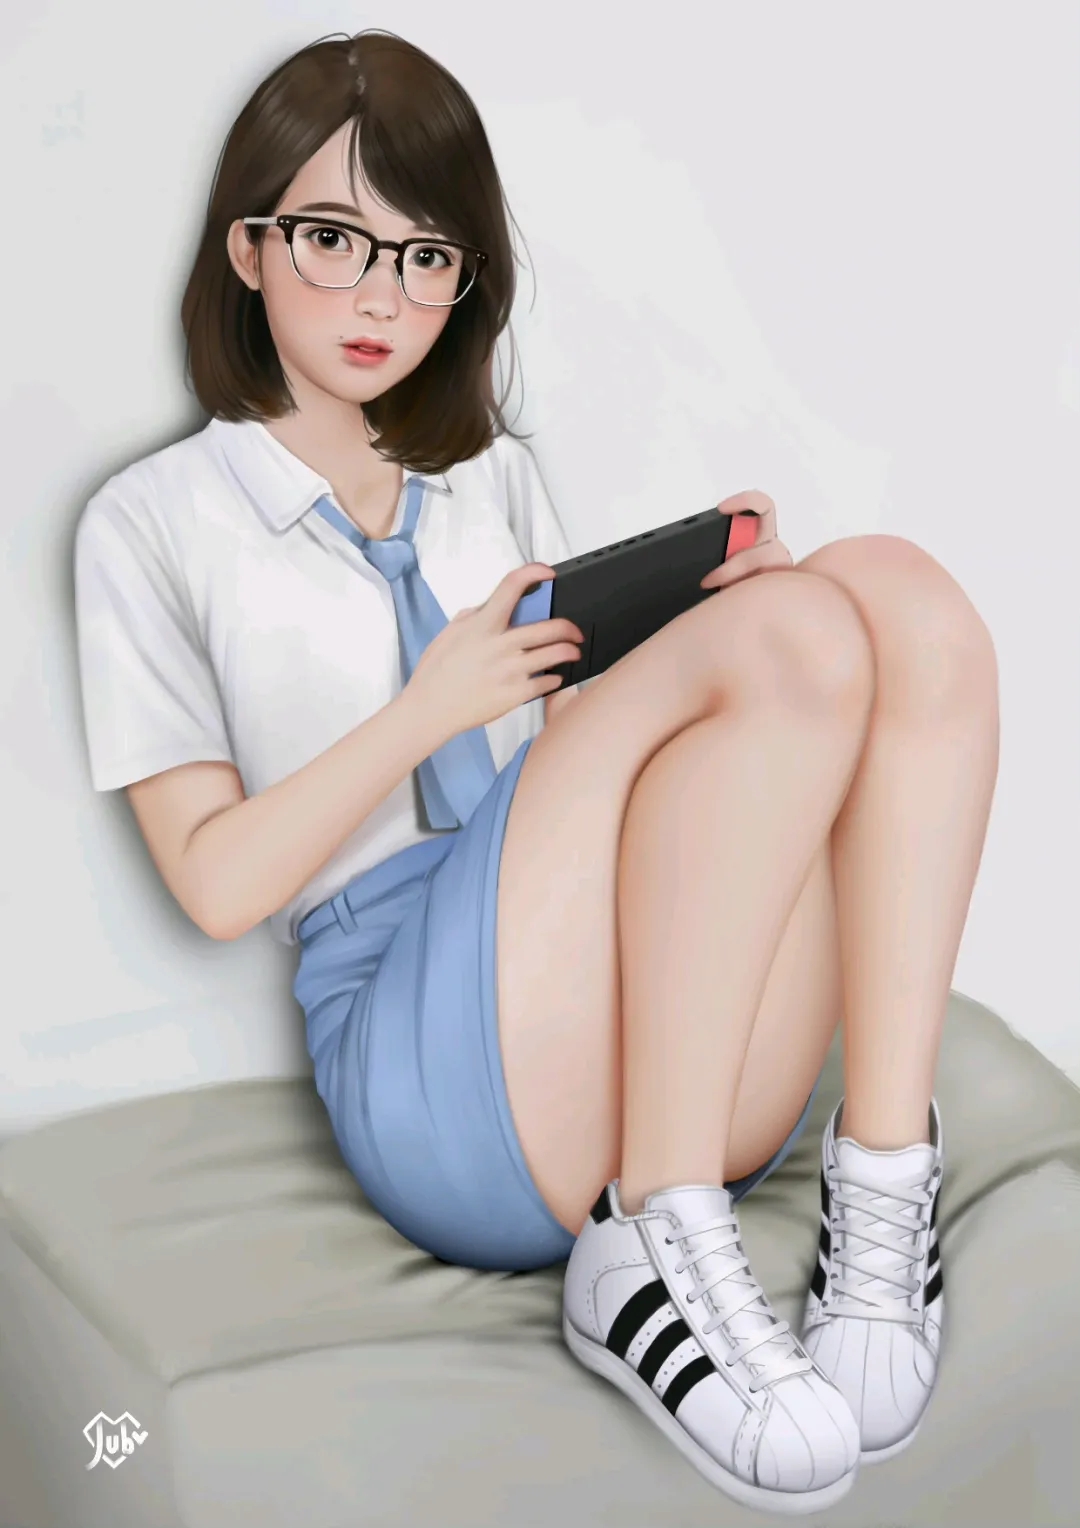 Women Glasses Nintendo Switch Shoes Tie 1080x1528